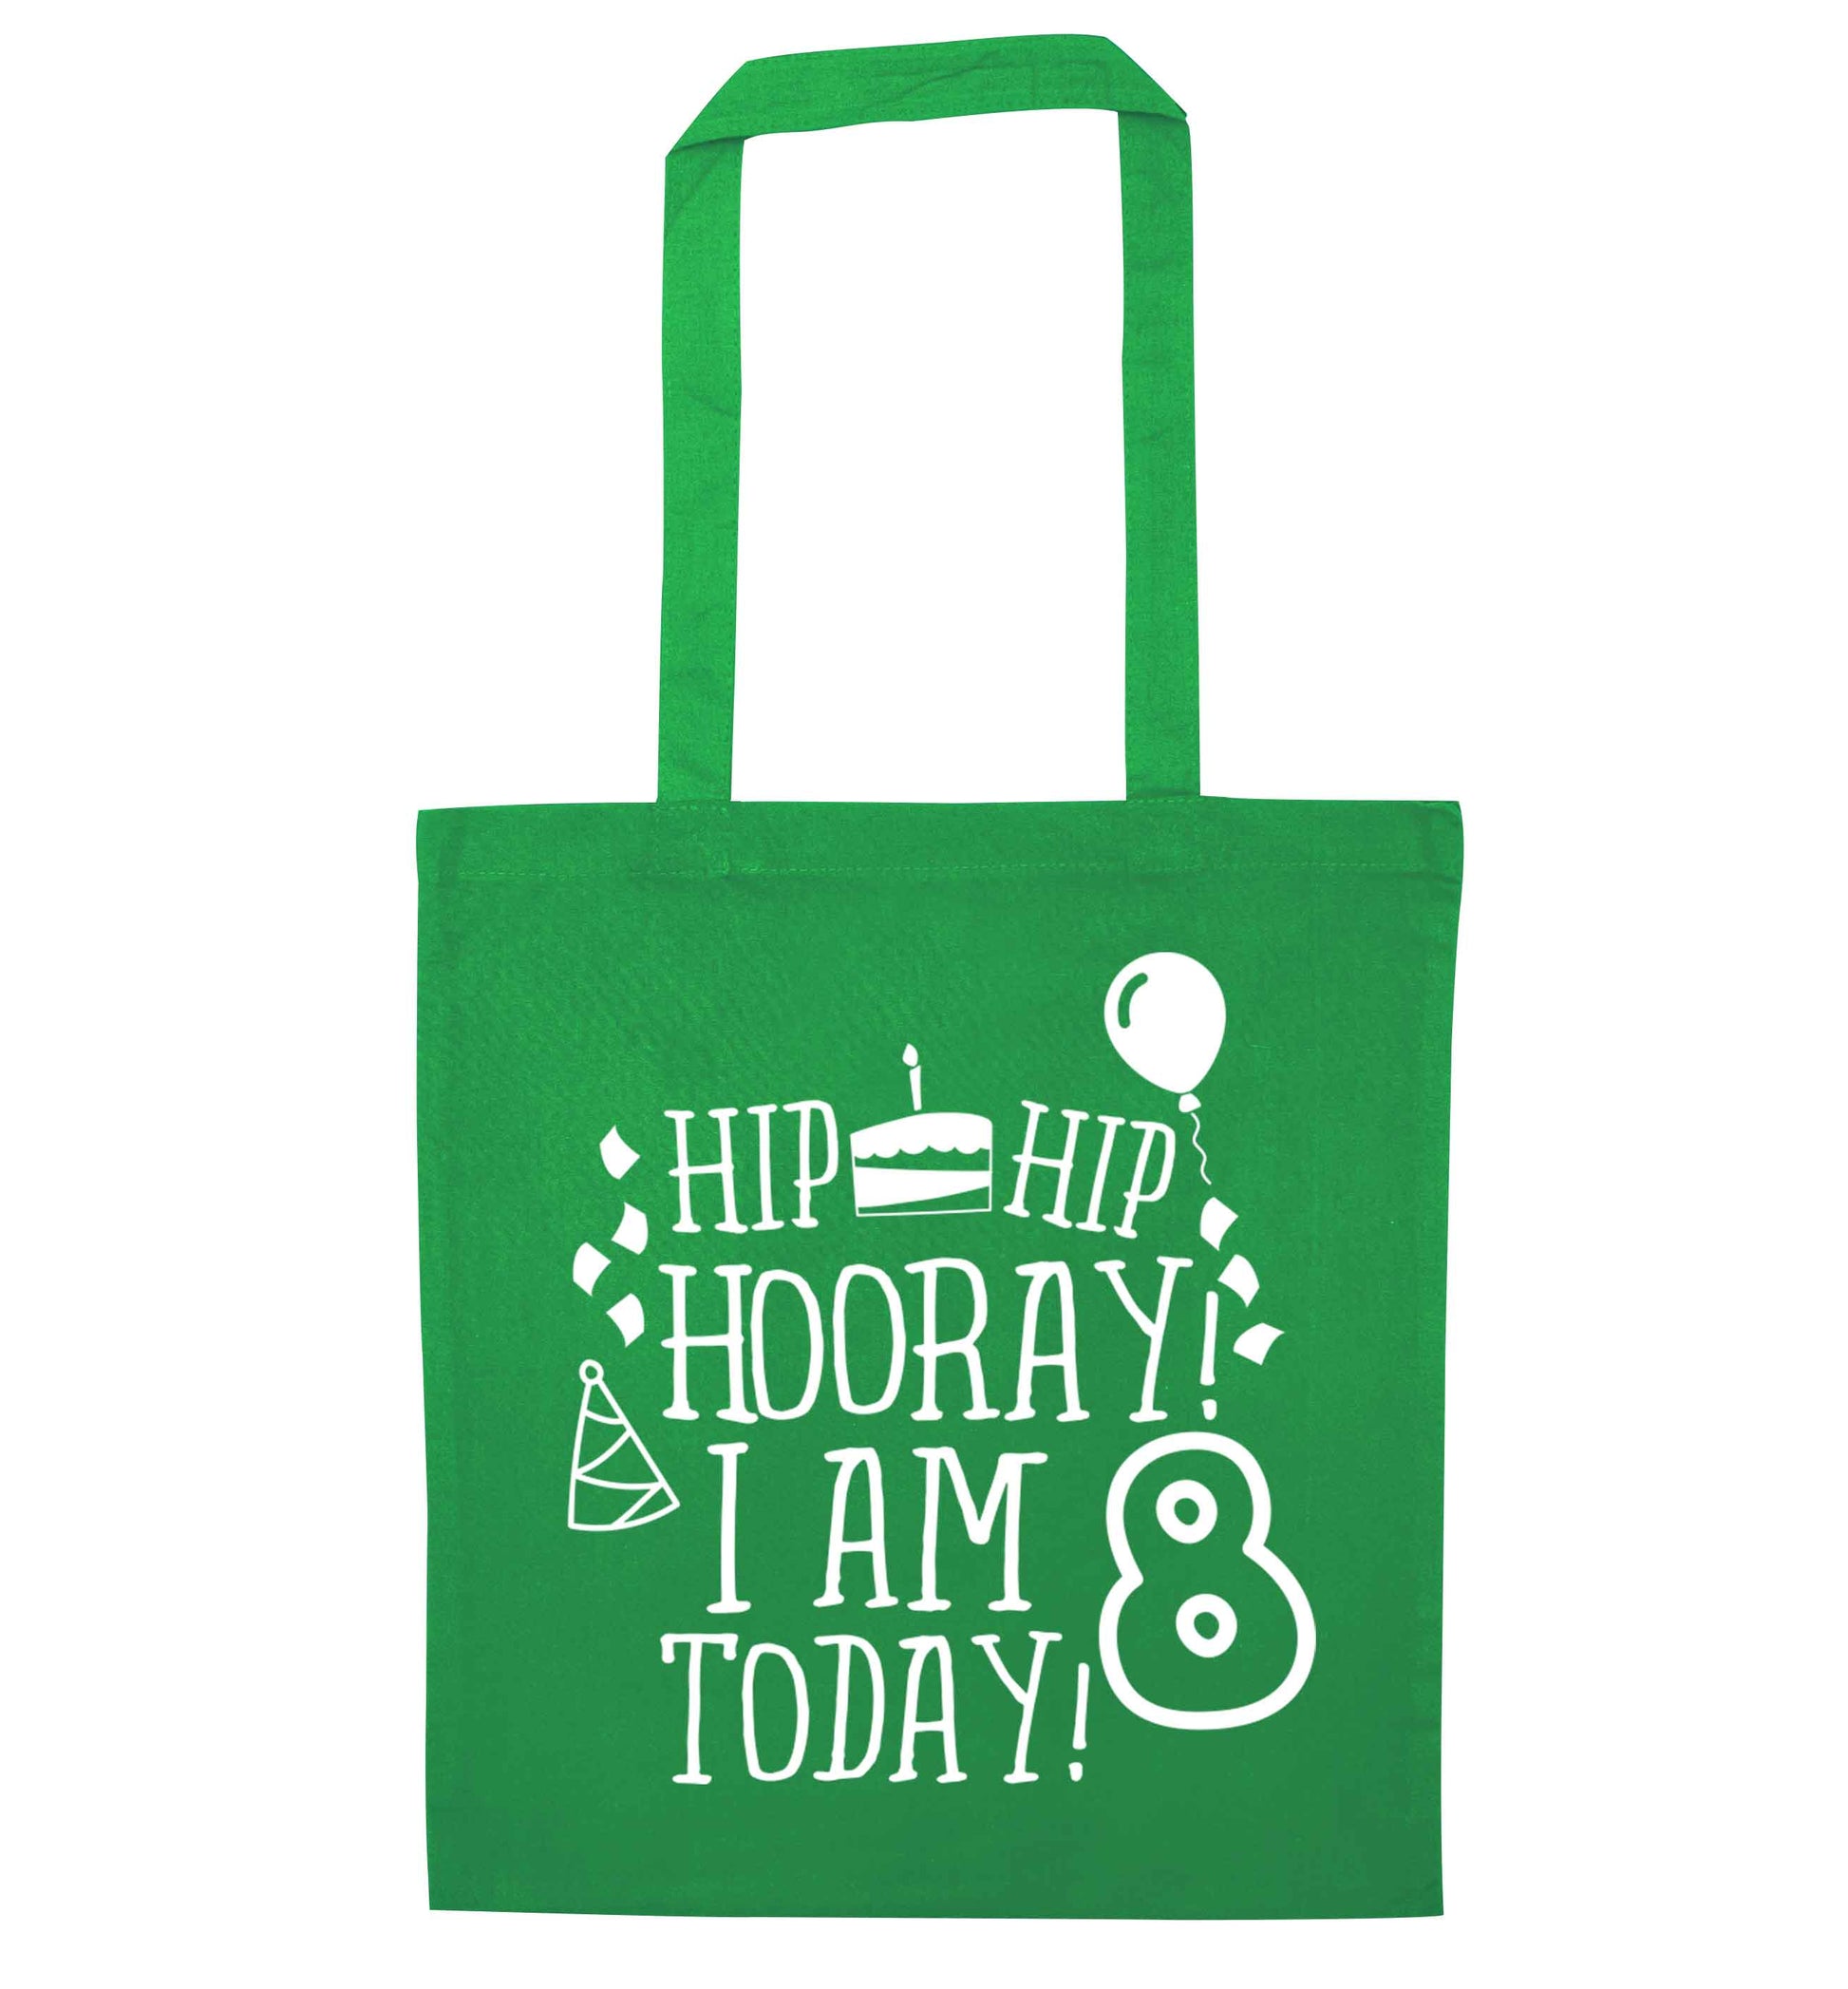 Hip hip hooray I am 8 today! green tote bag